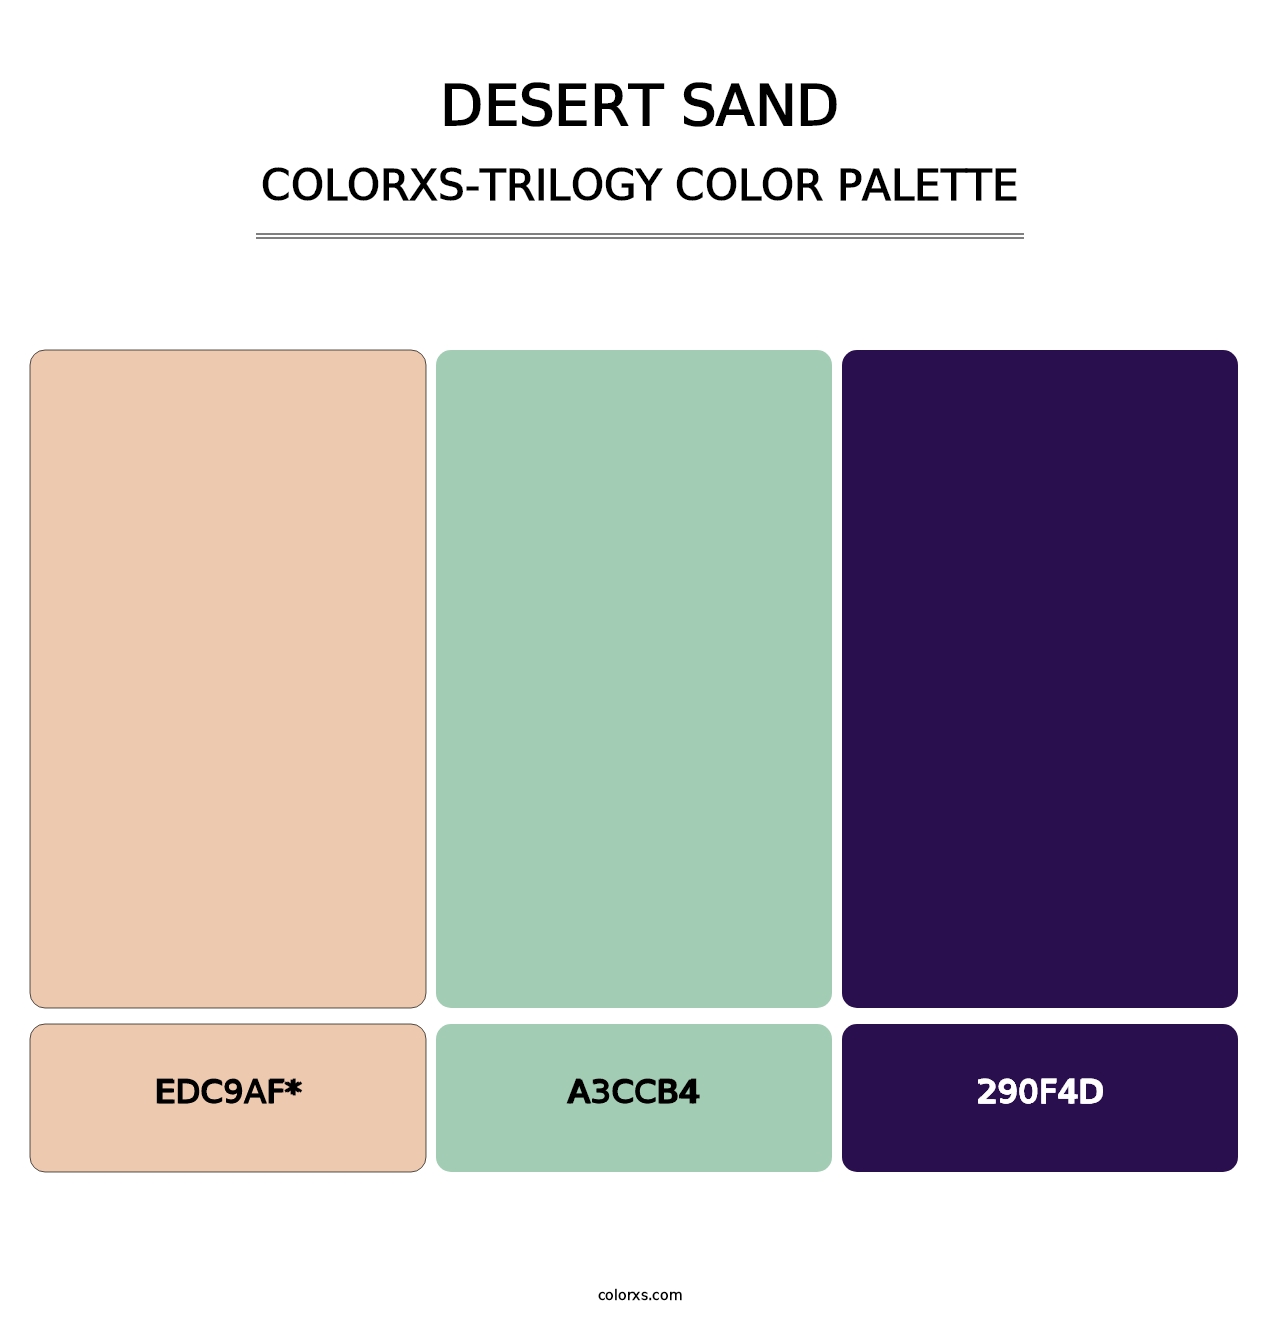 Desert Sand - Colorxs Trilogy Palette